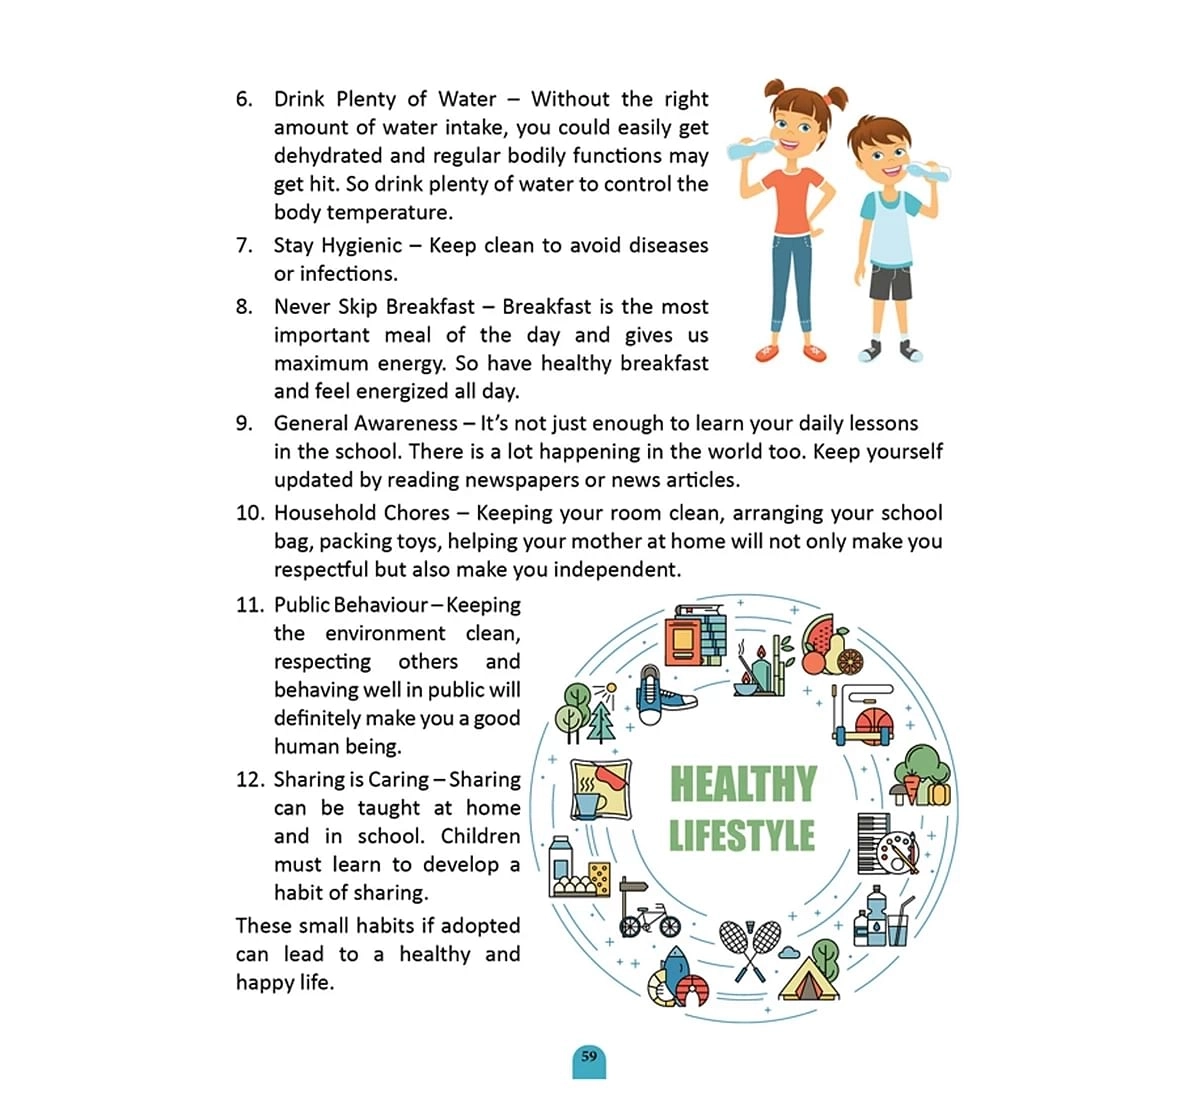 Dreamland Paper Back Children Health Education Part 6 Book for kids 10Y+, Multicolour